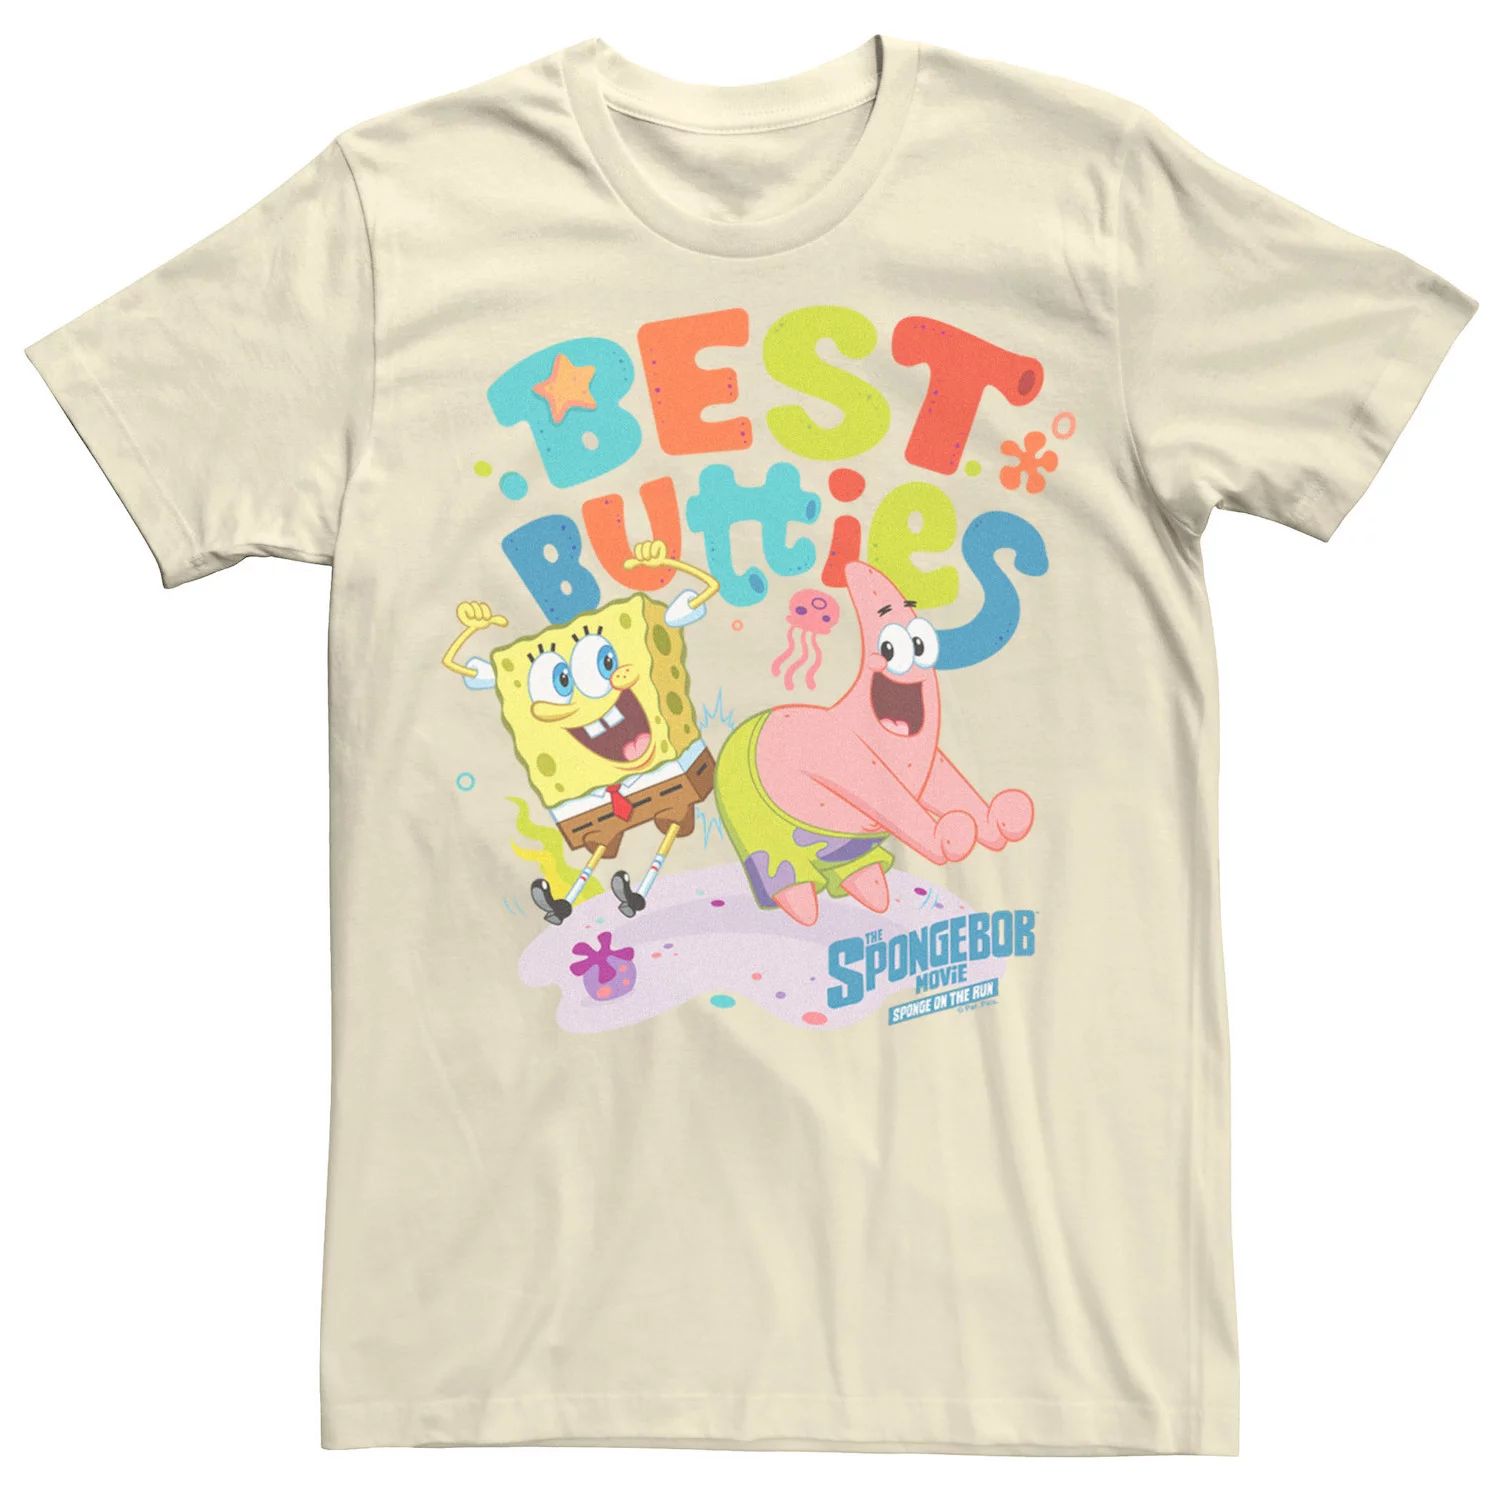 Мужская футболка с изображением Губки Боба Best Butties Licensed Character мужская футболка с изображением губки боба пасхи пасхи airwaves цвет blue 2